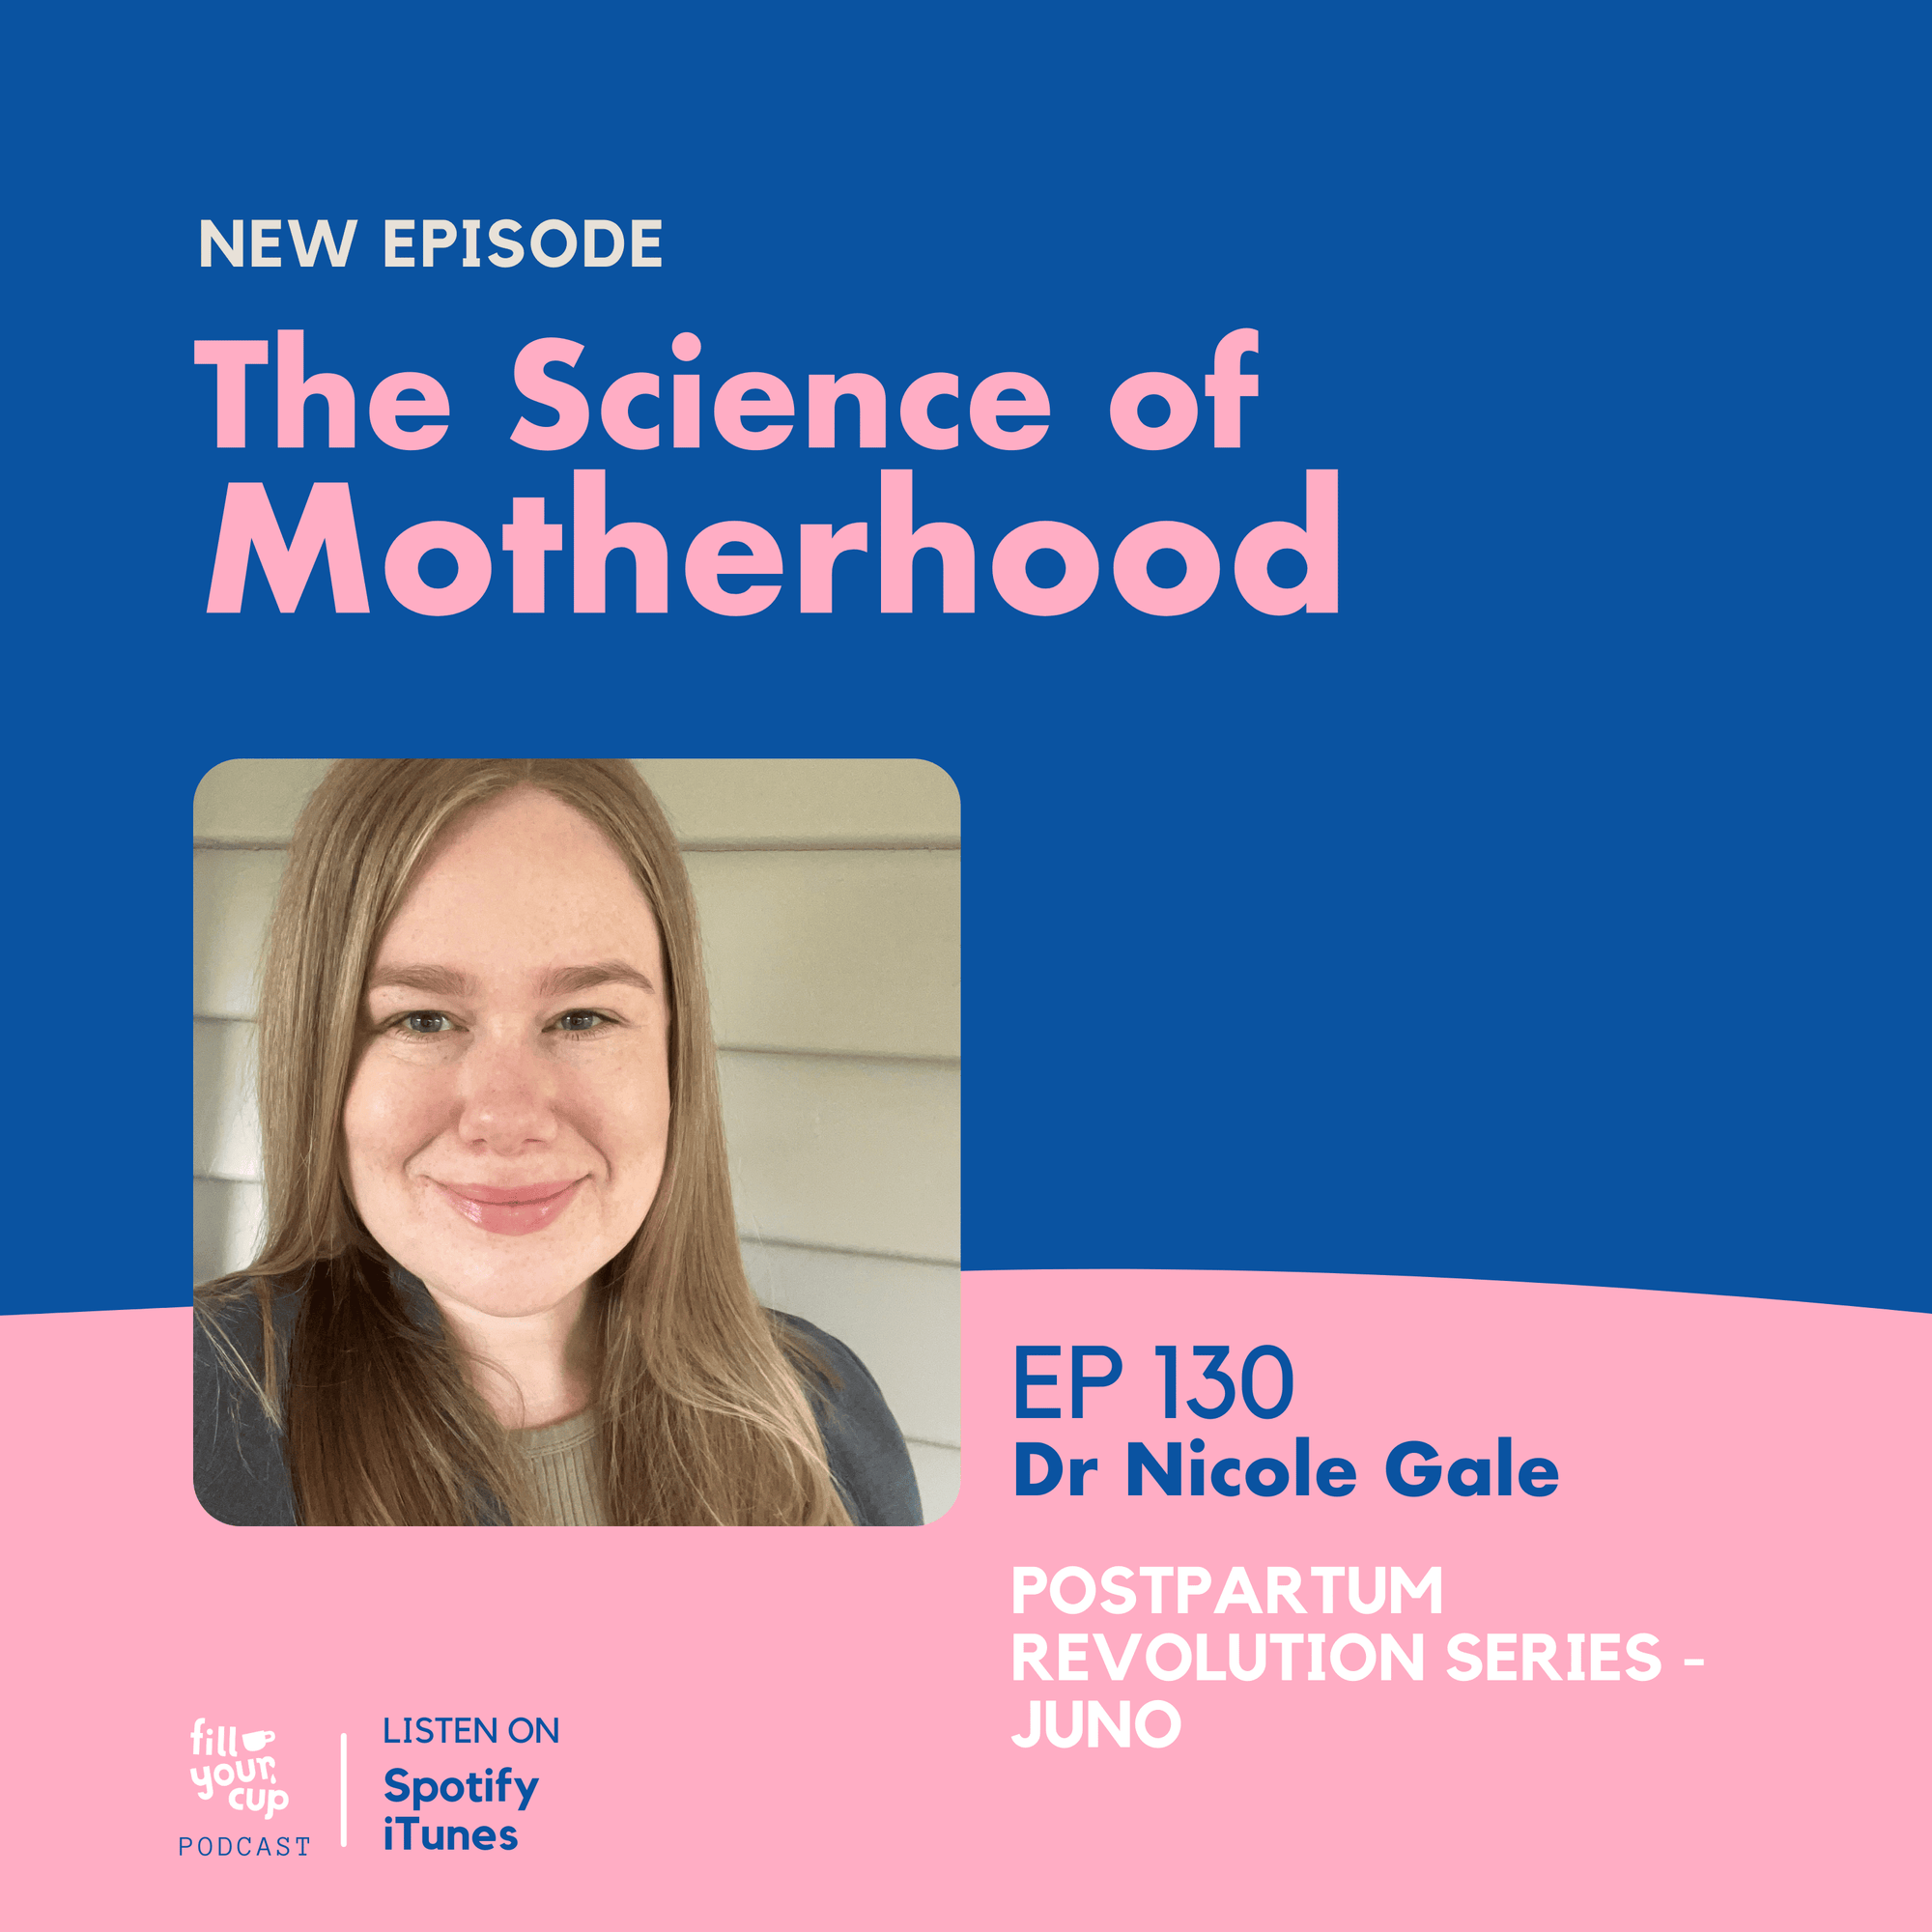 Ep 130. Dr Nicole Gale of Juno - Postpartum Revolution Series